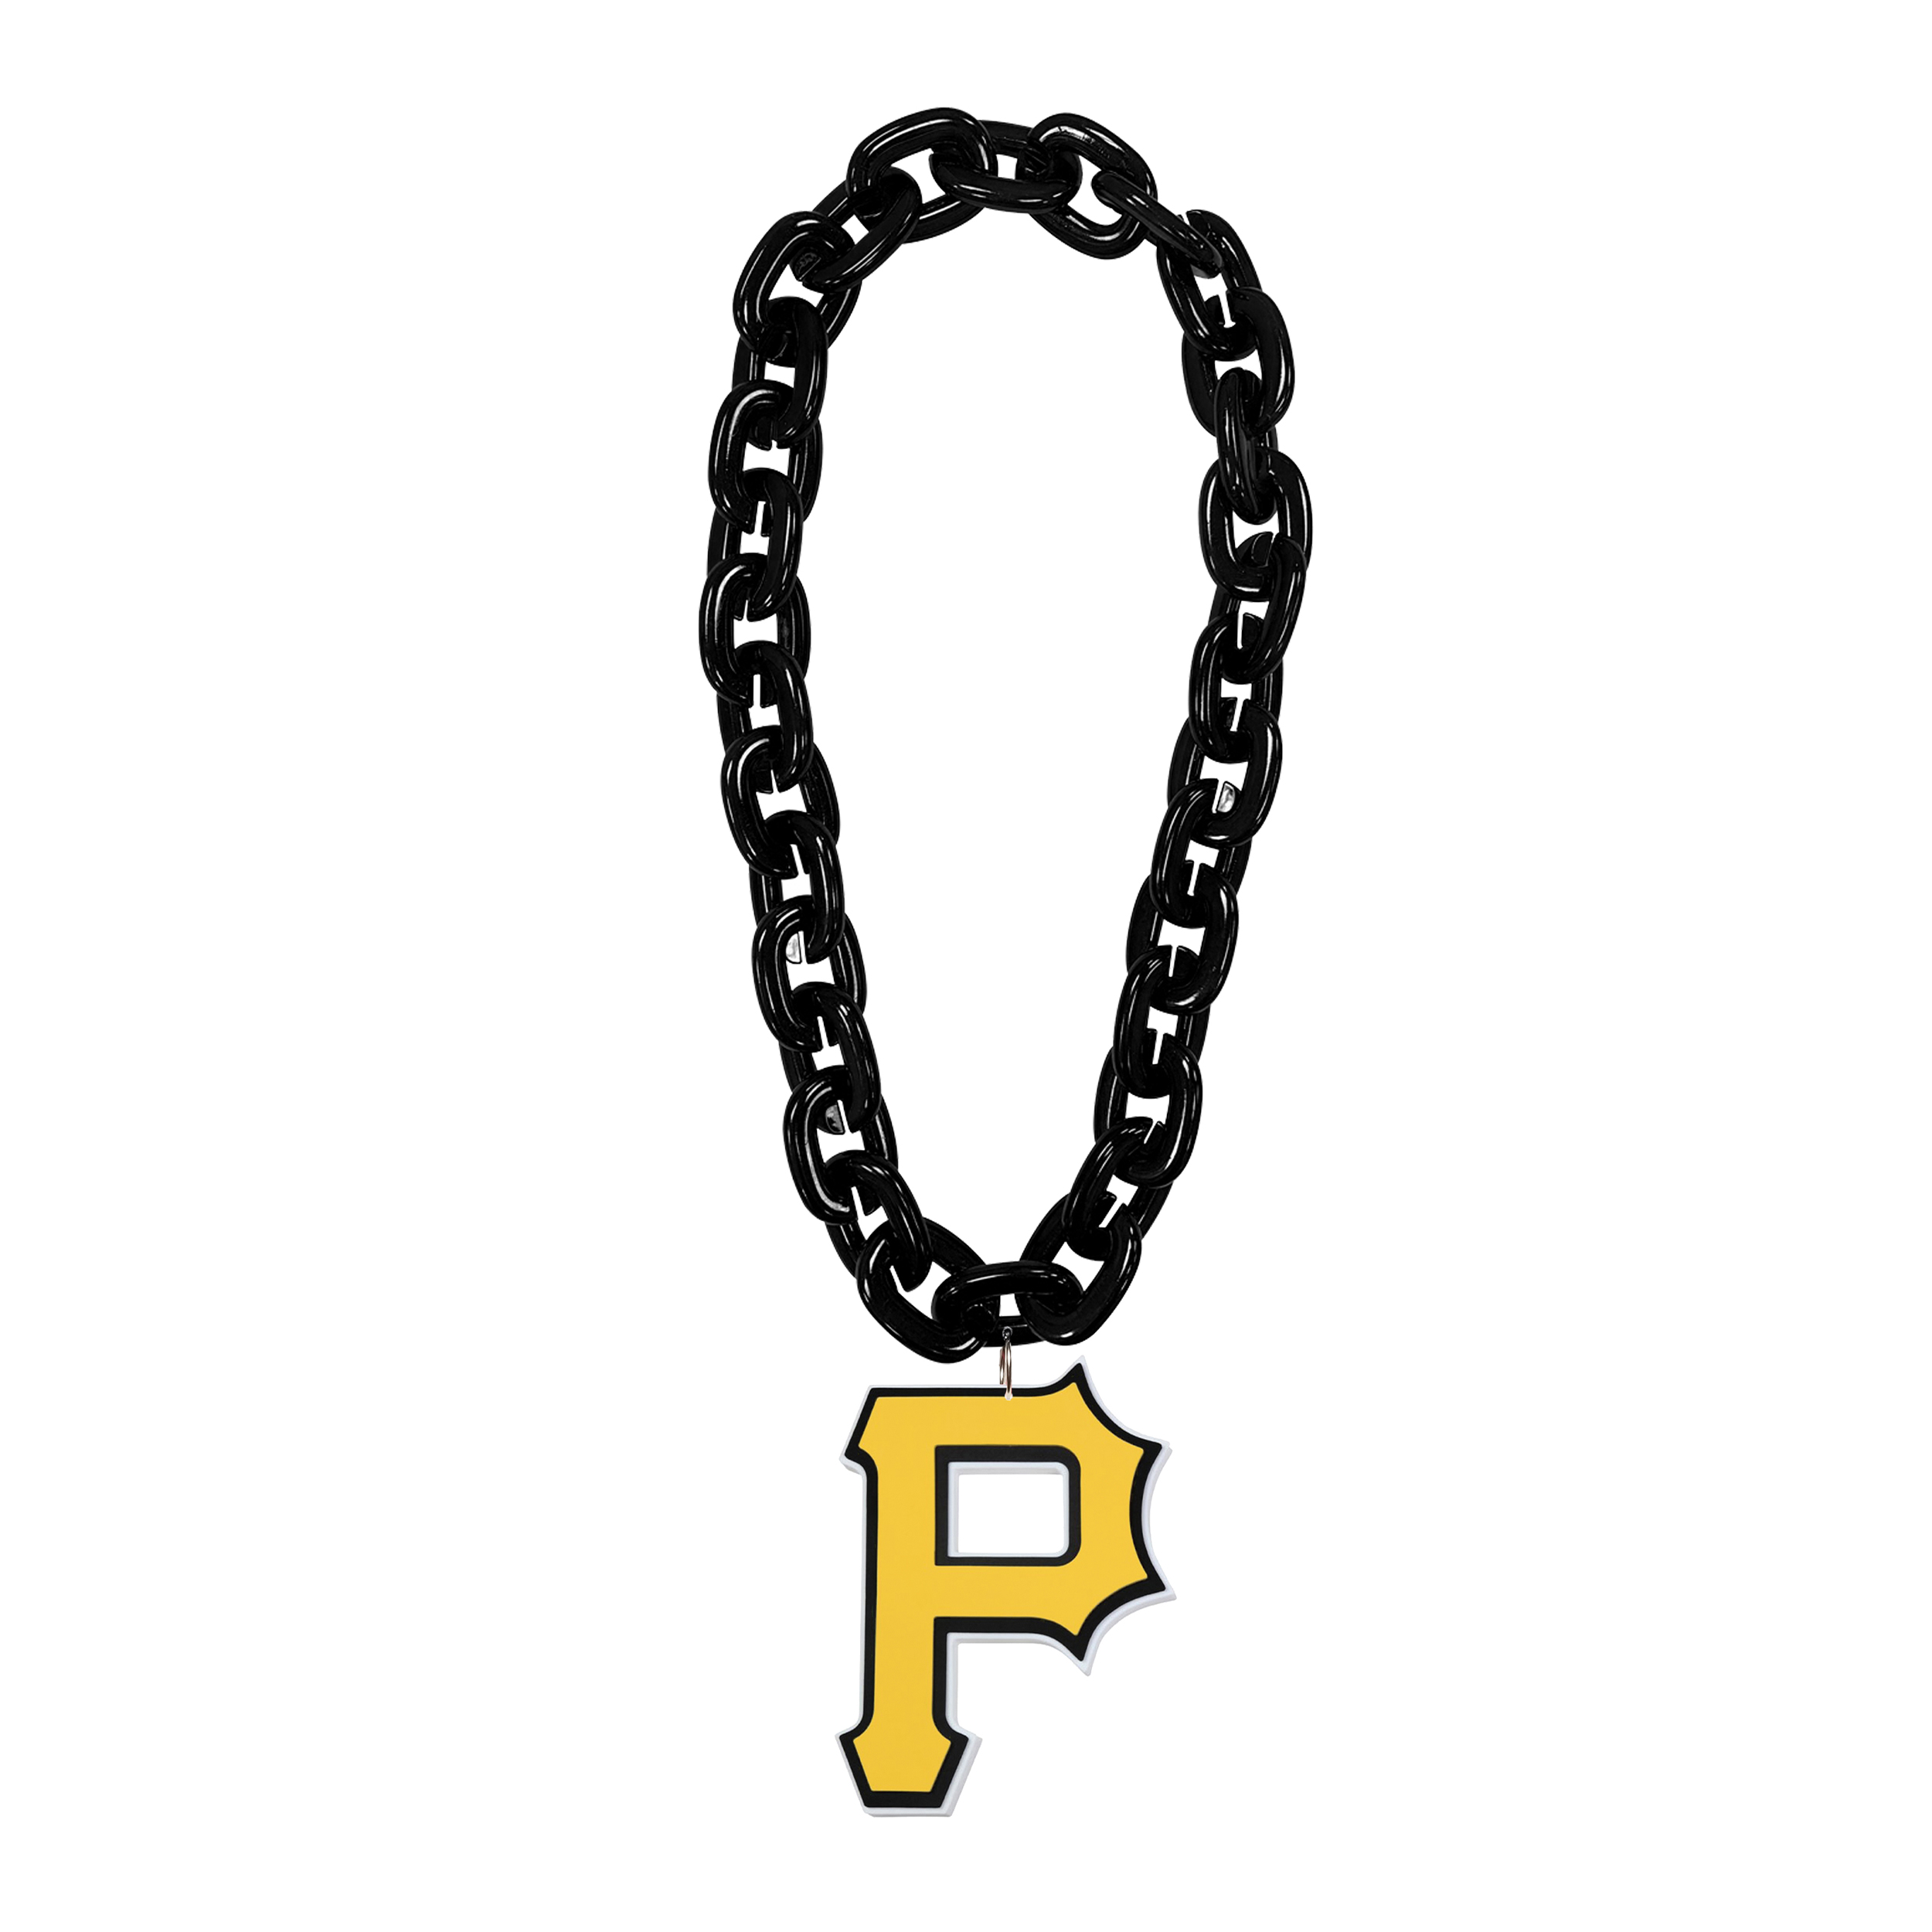 Pittsburgh Pirates Fan Chain